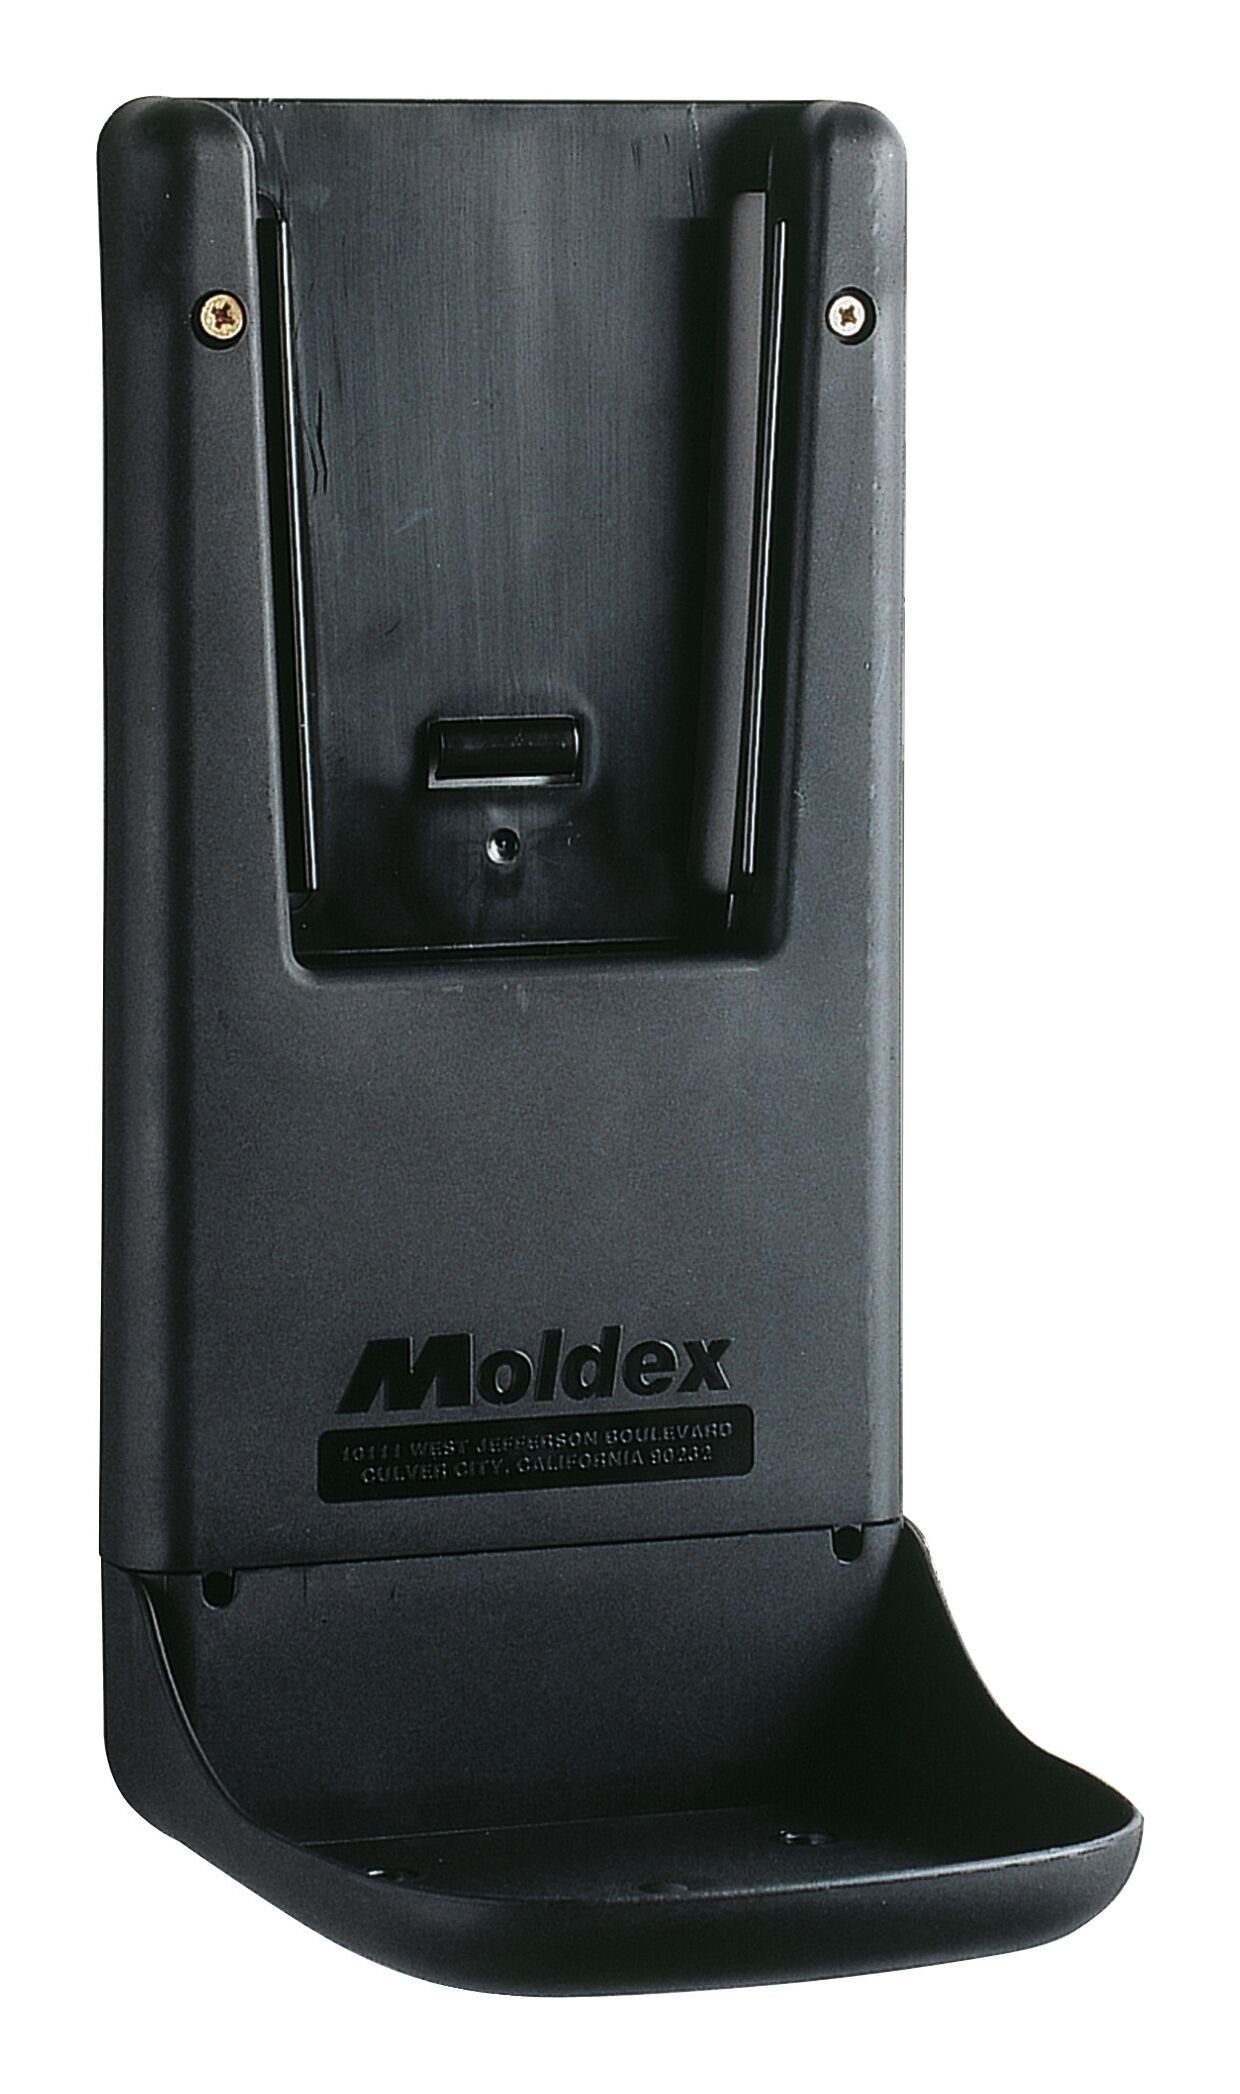 Moldex Gehörschutzstöpsel, Wandhalterung 7060 für alle Gehörschutzspender